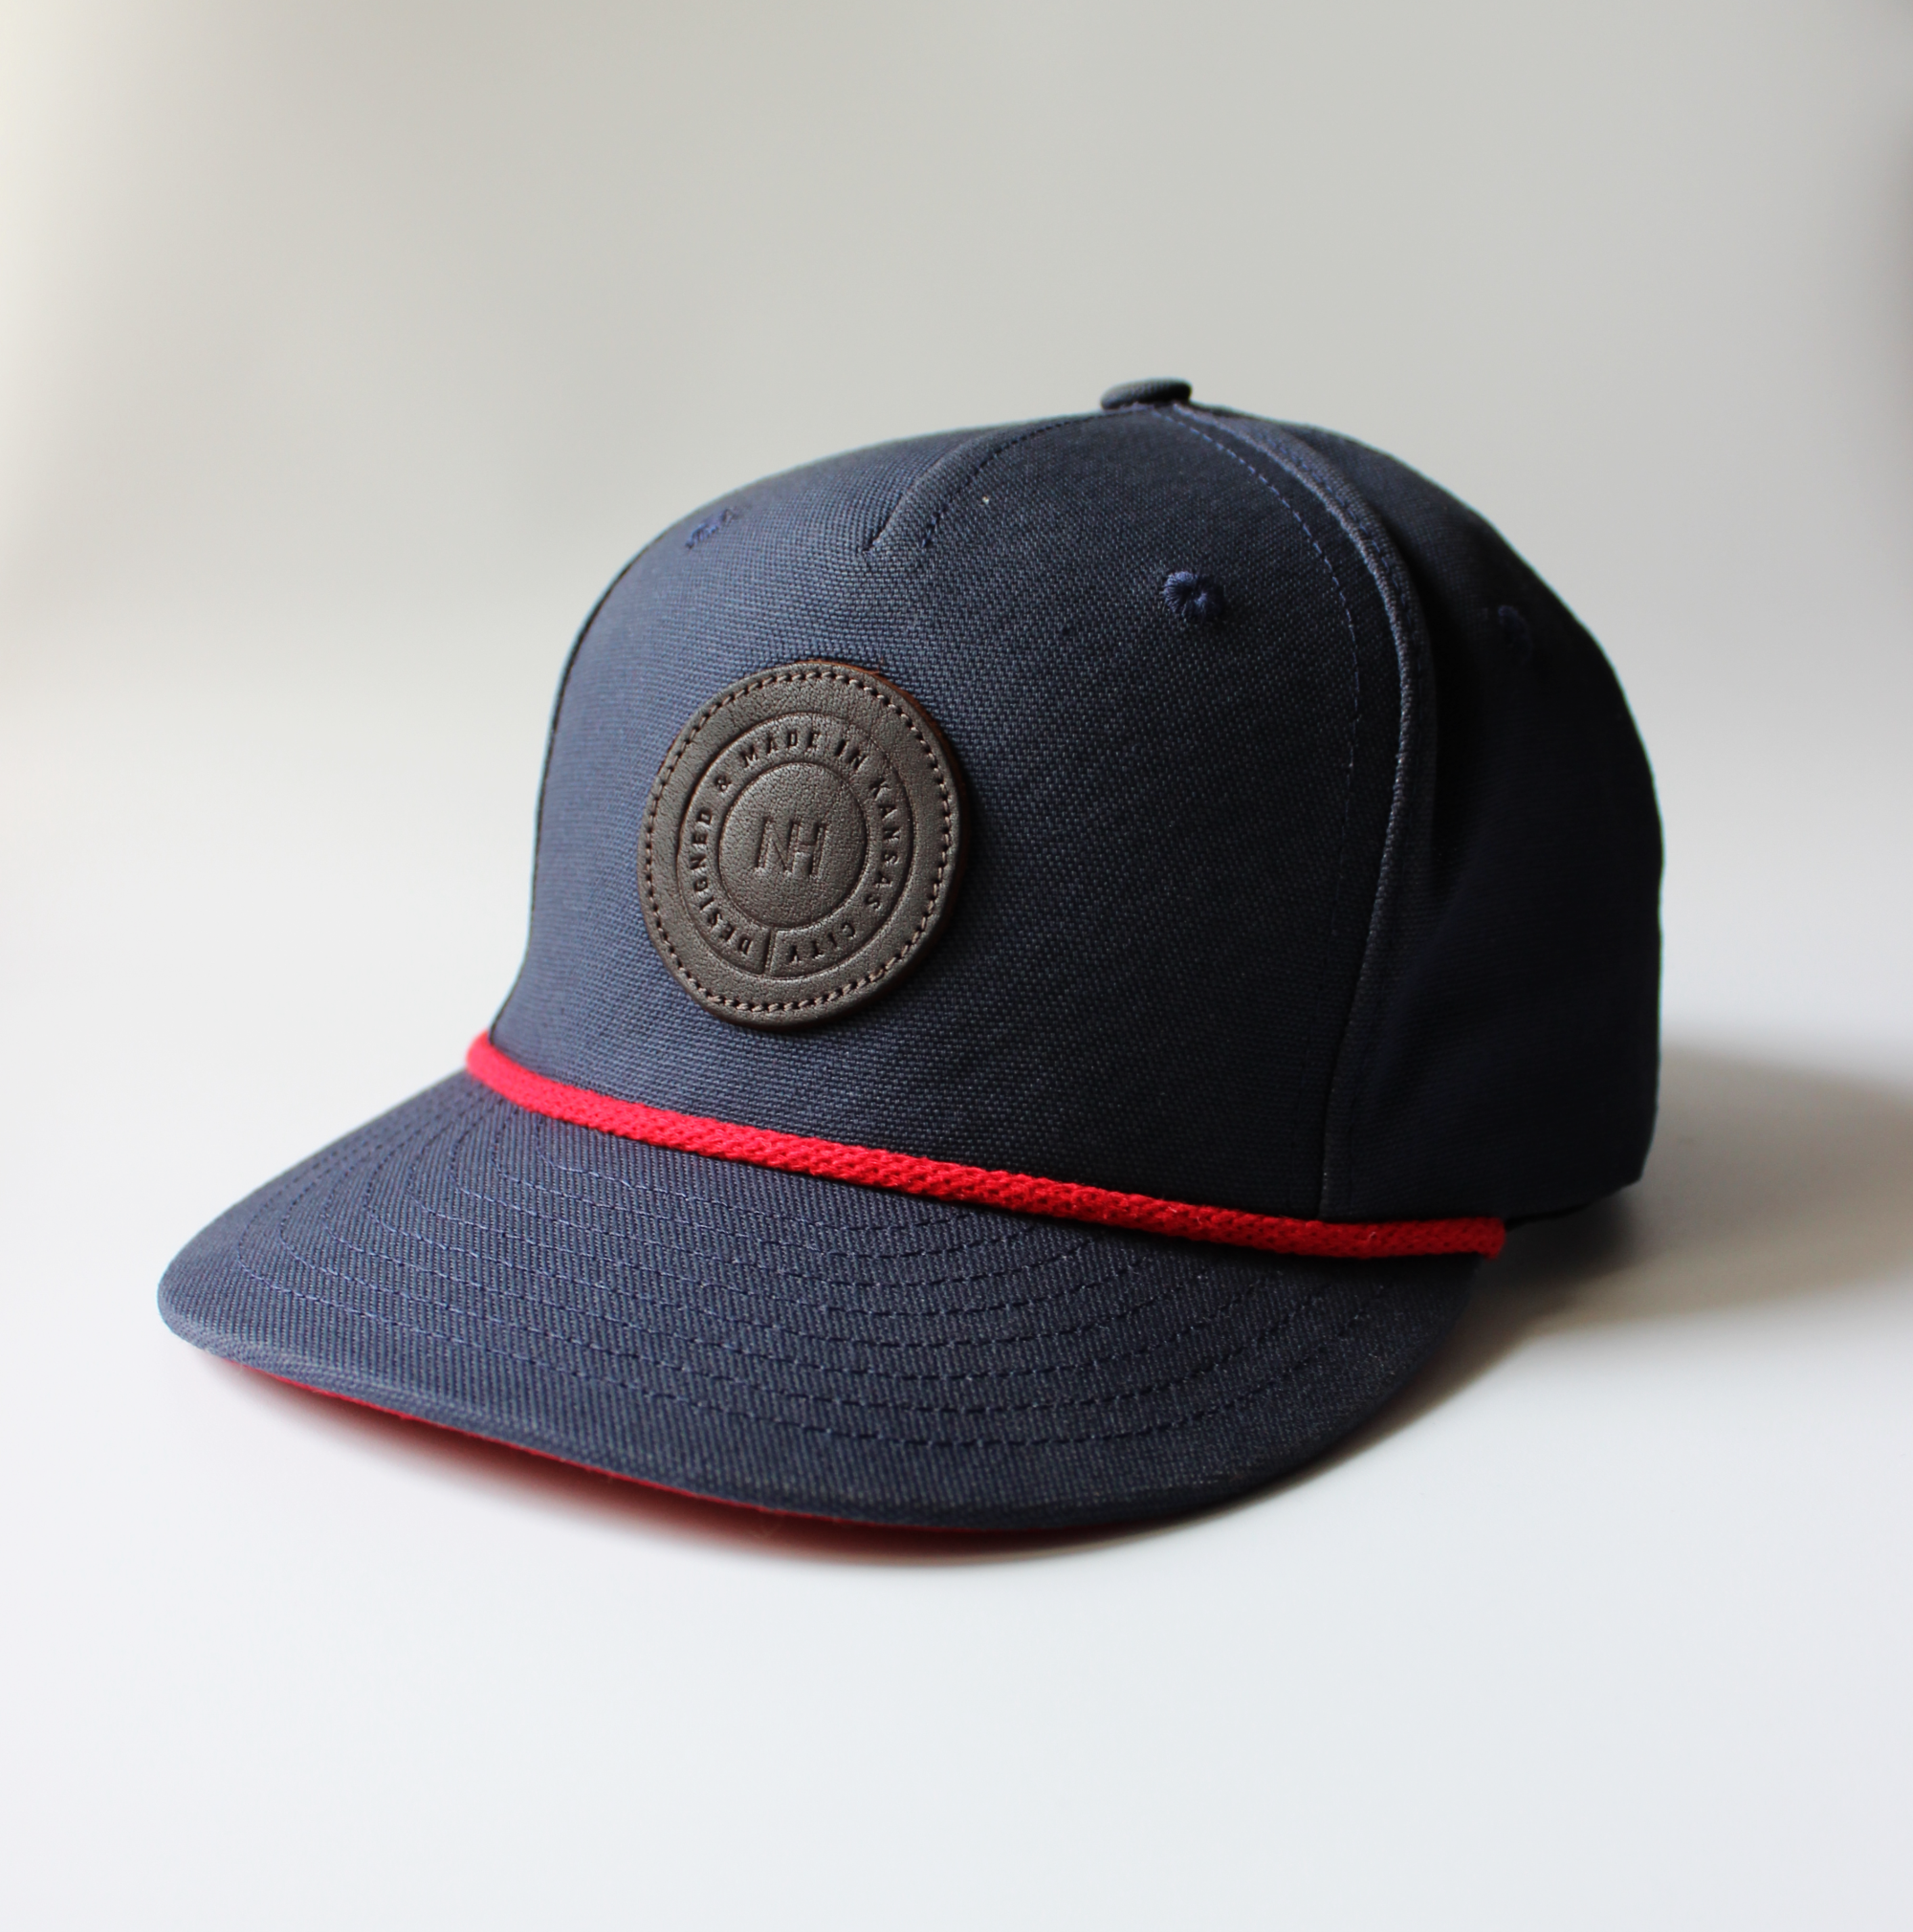 NH Sandlot Rope Hat – $44